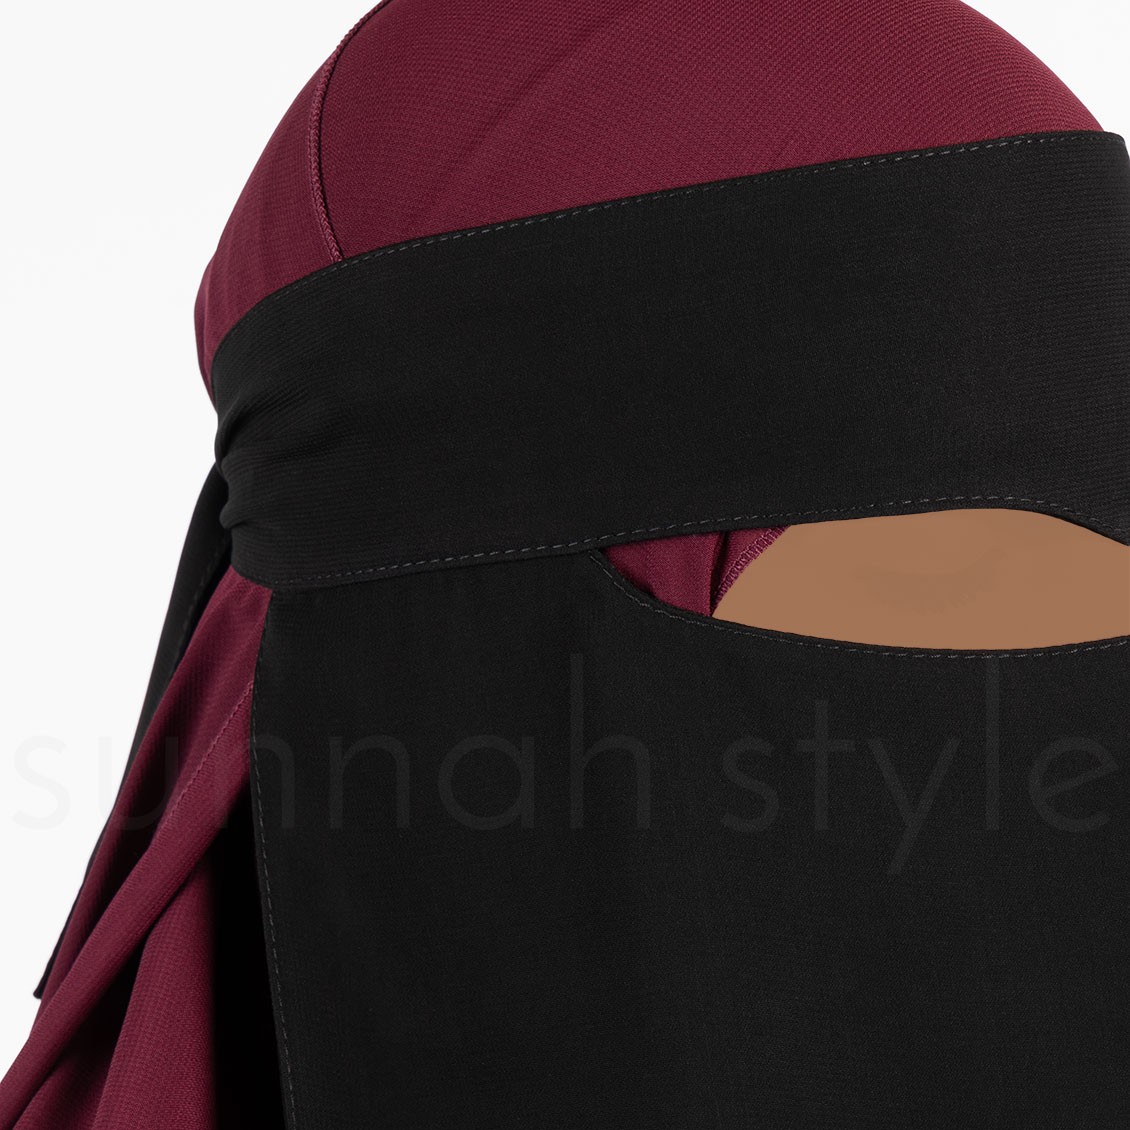 Sunnah Style One Layer Widows Peak Niqab Black